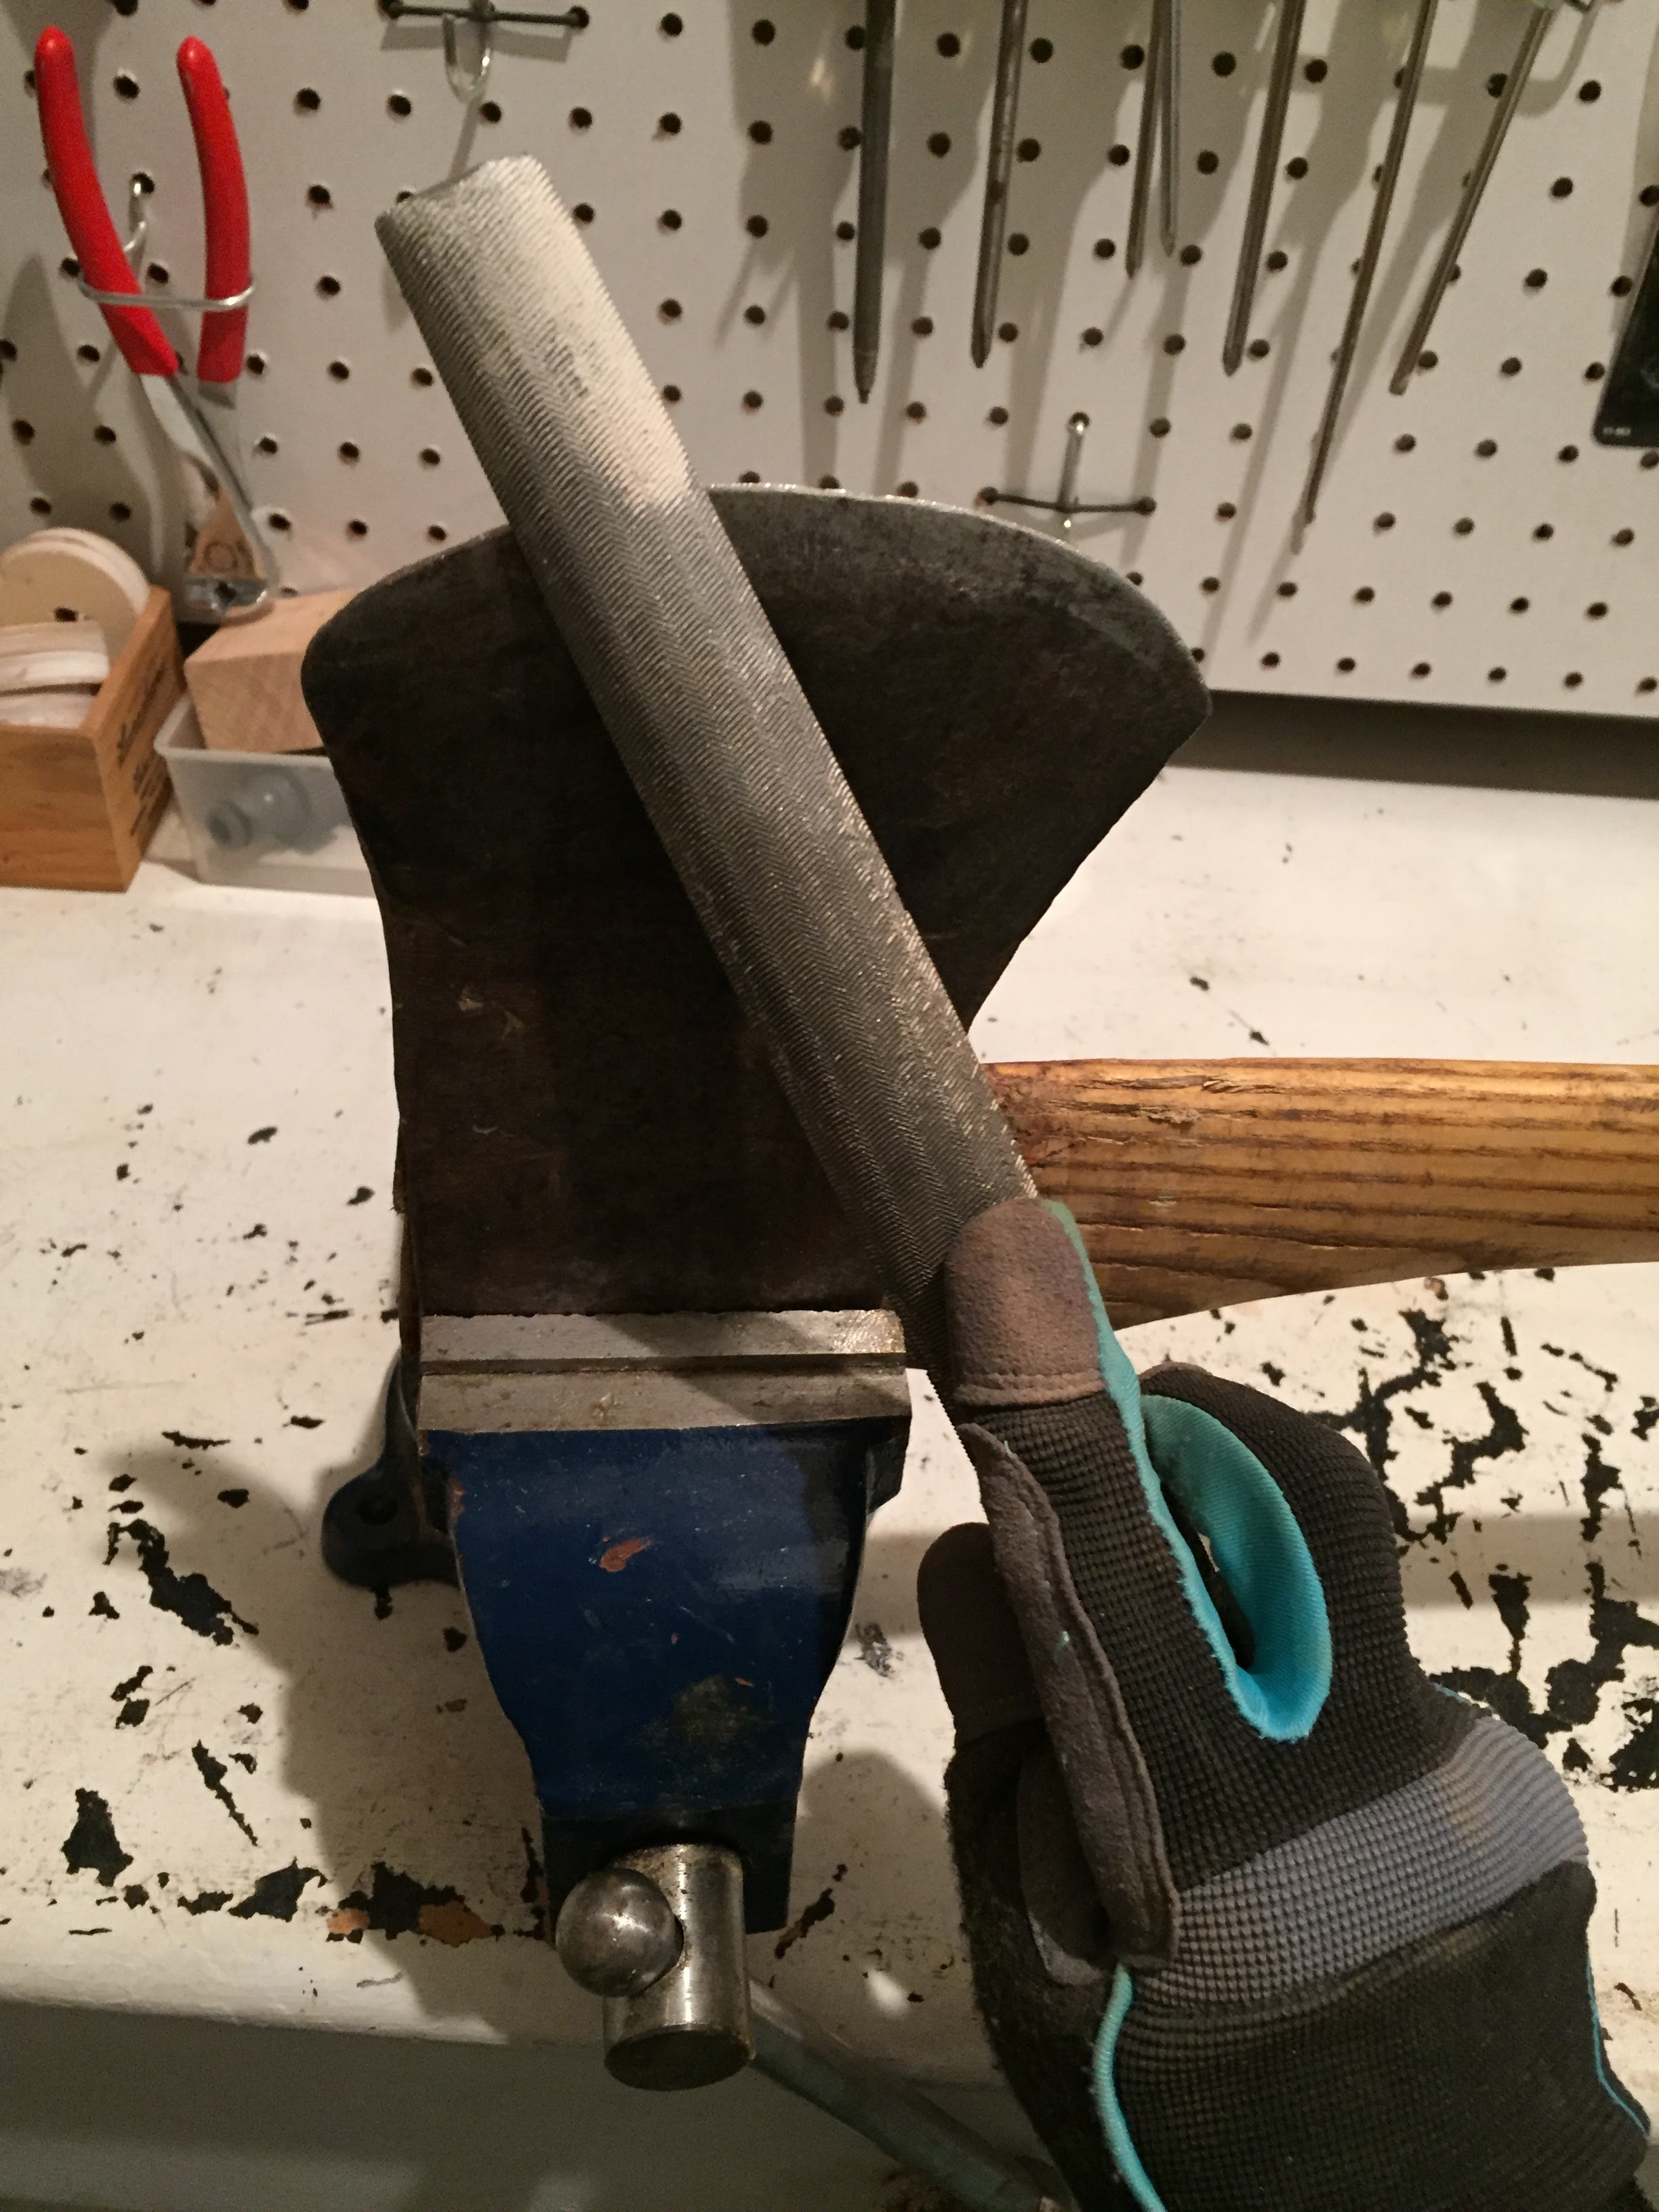 sharpen dull old axe